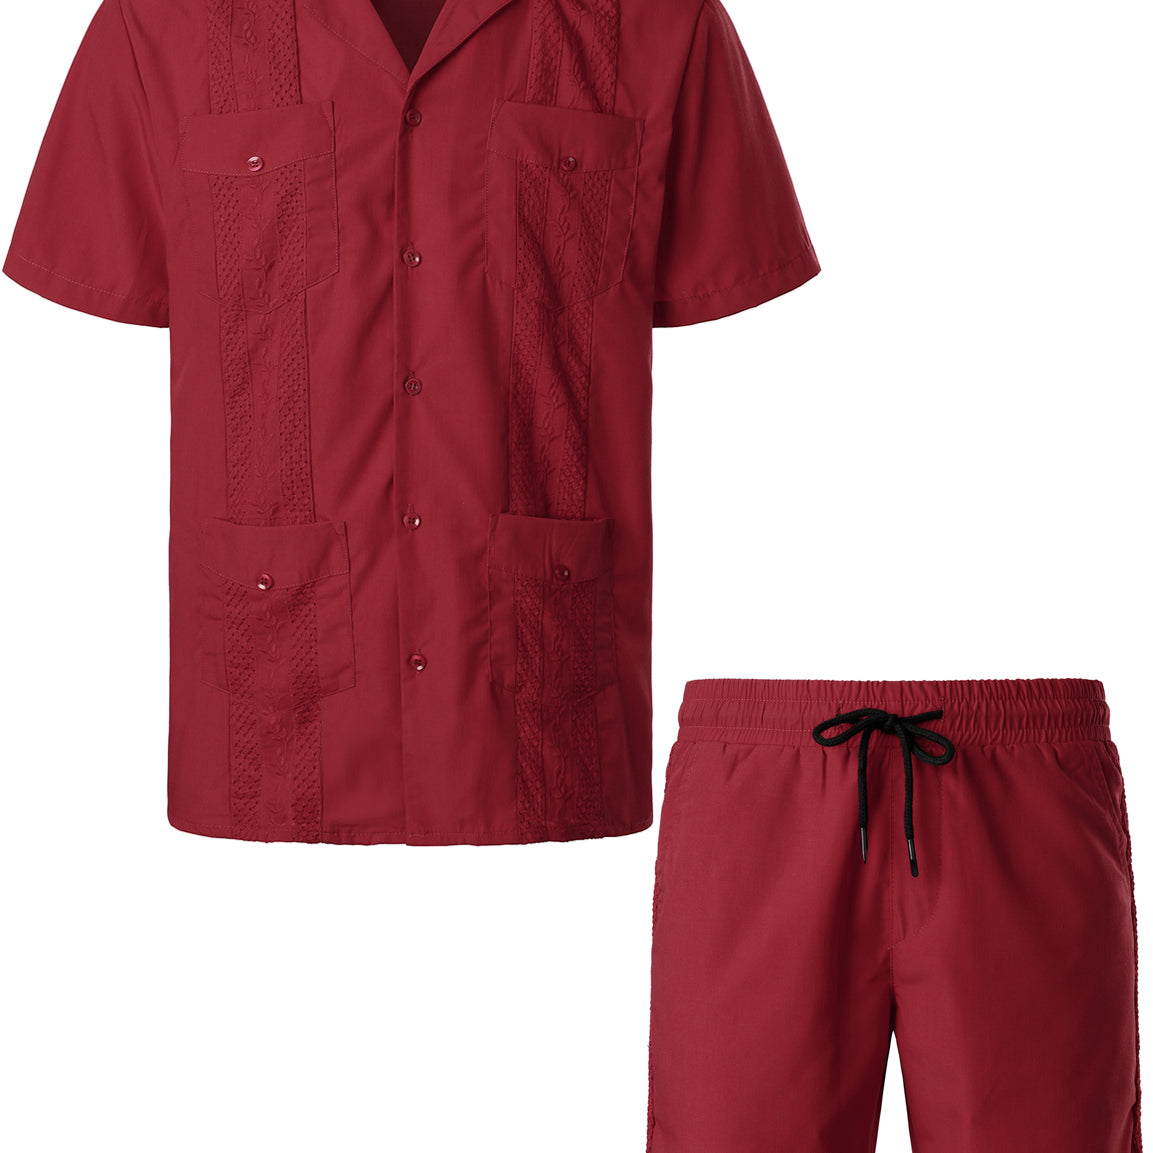 Men's Plus Size Short Sleeve Button Down Cuban Guayabera Matching Shirt and Shorts Set